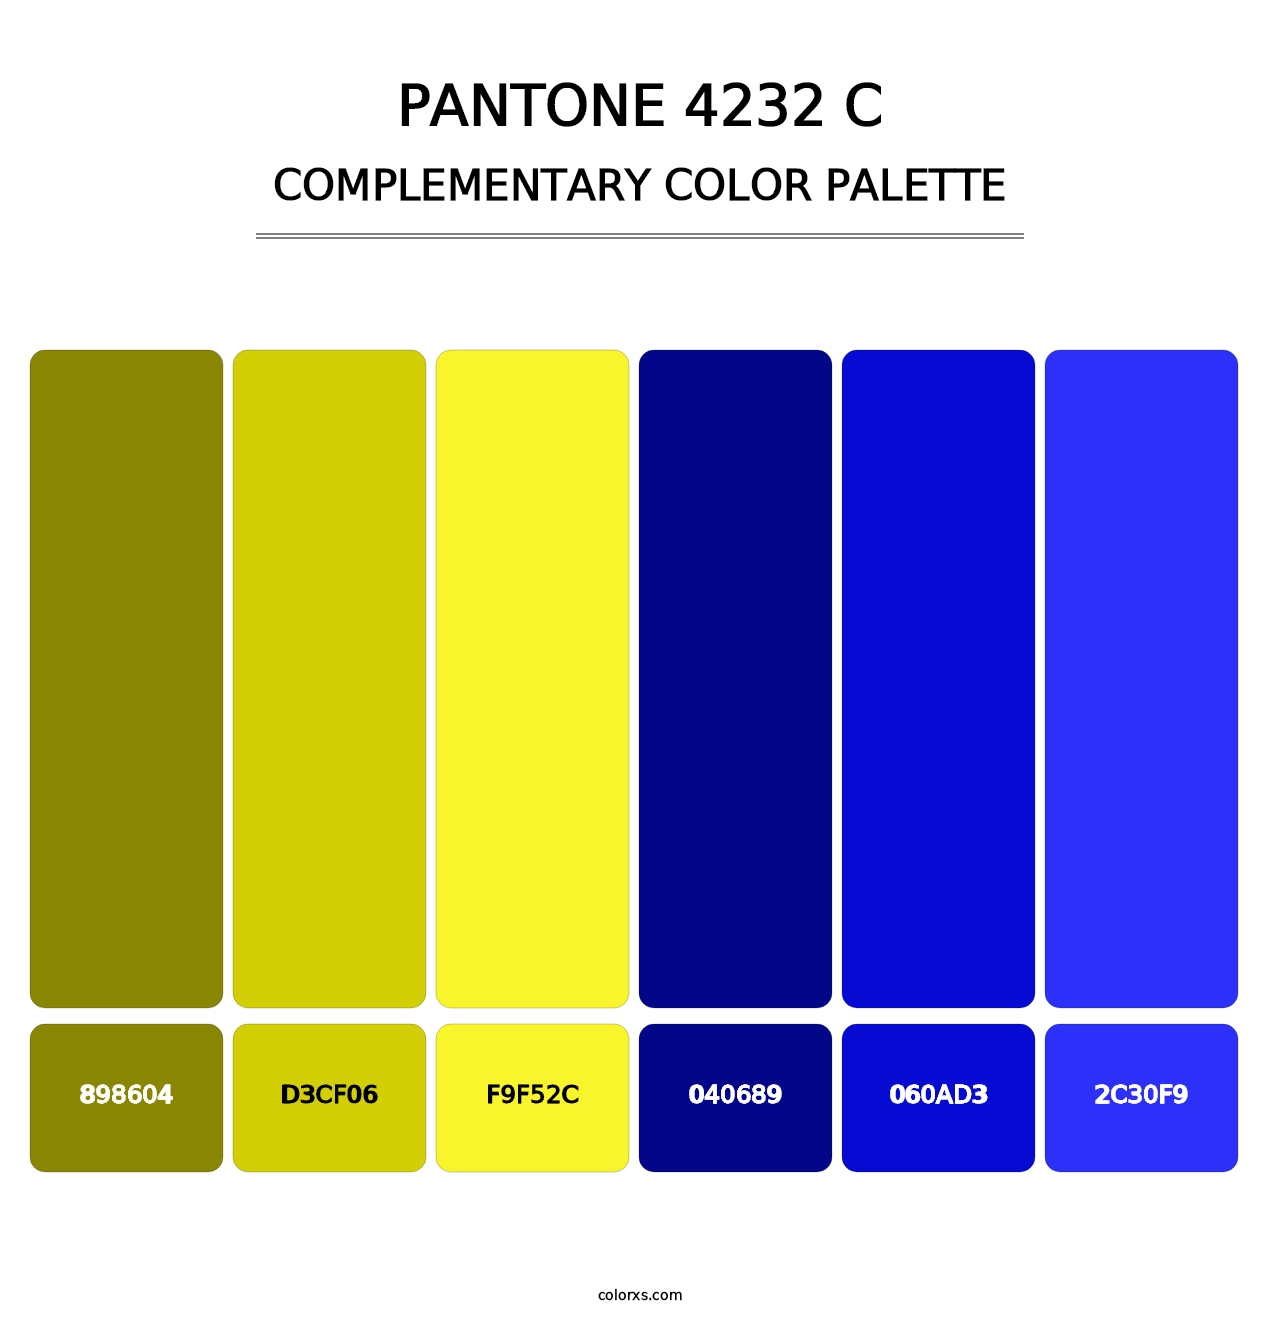 PANTONE 4232 C - Complementary Color Palette